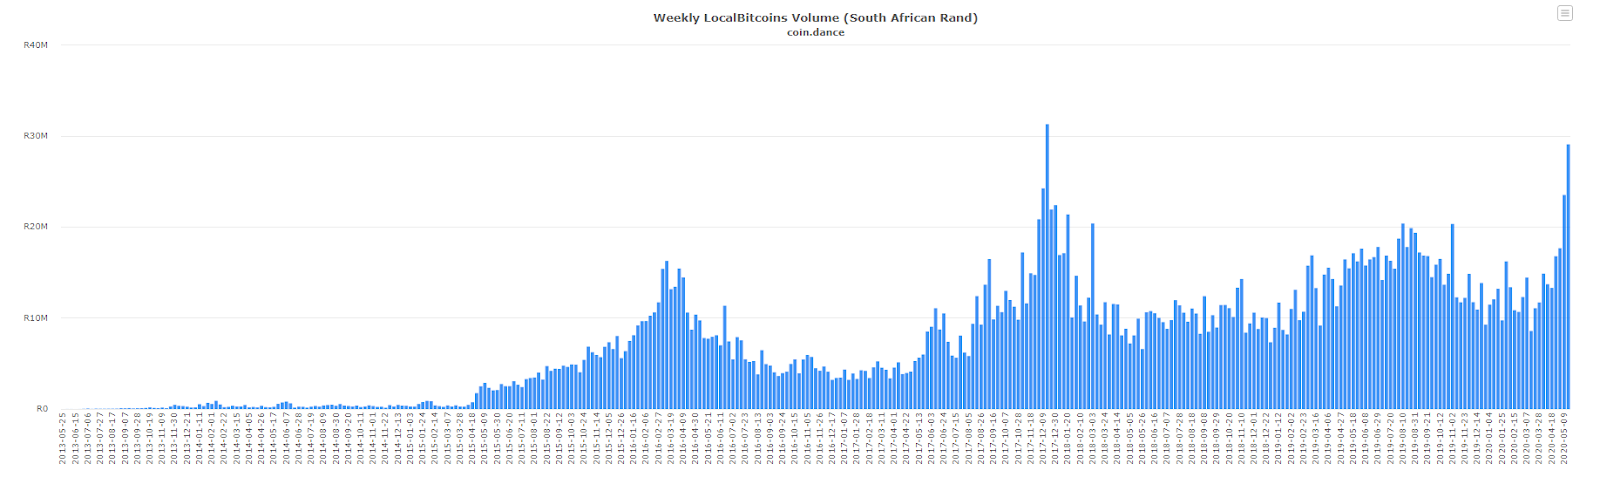 Weekly Localbitcoins trade volume: Coin.dance